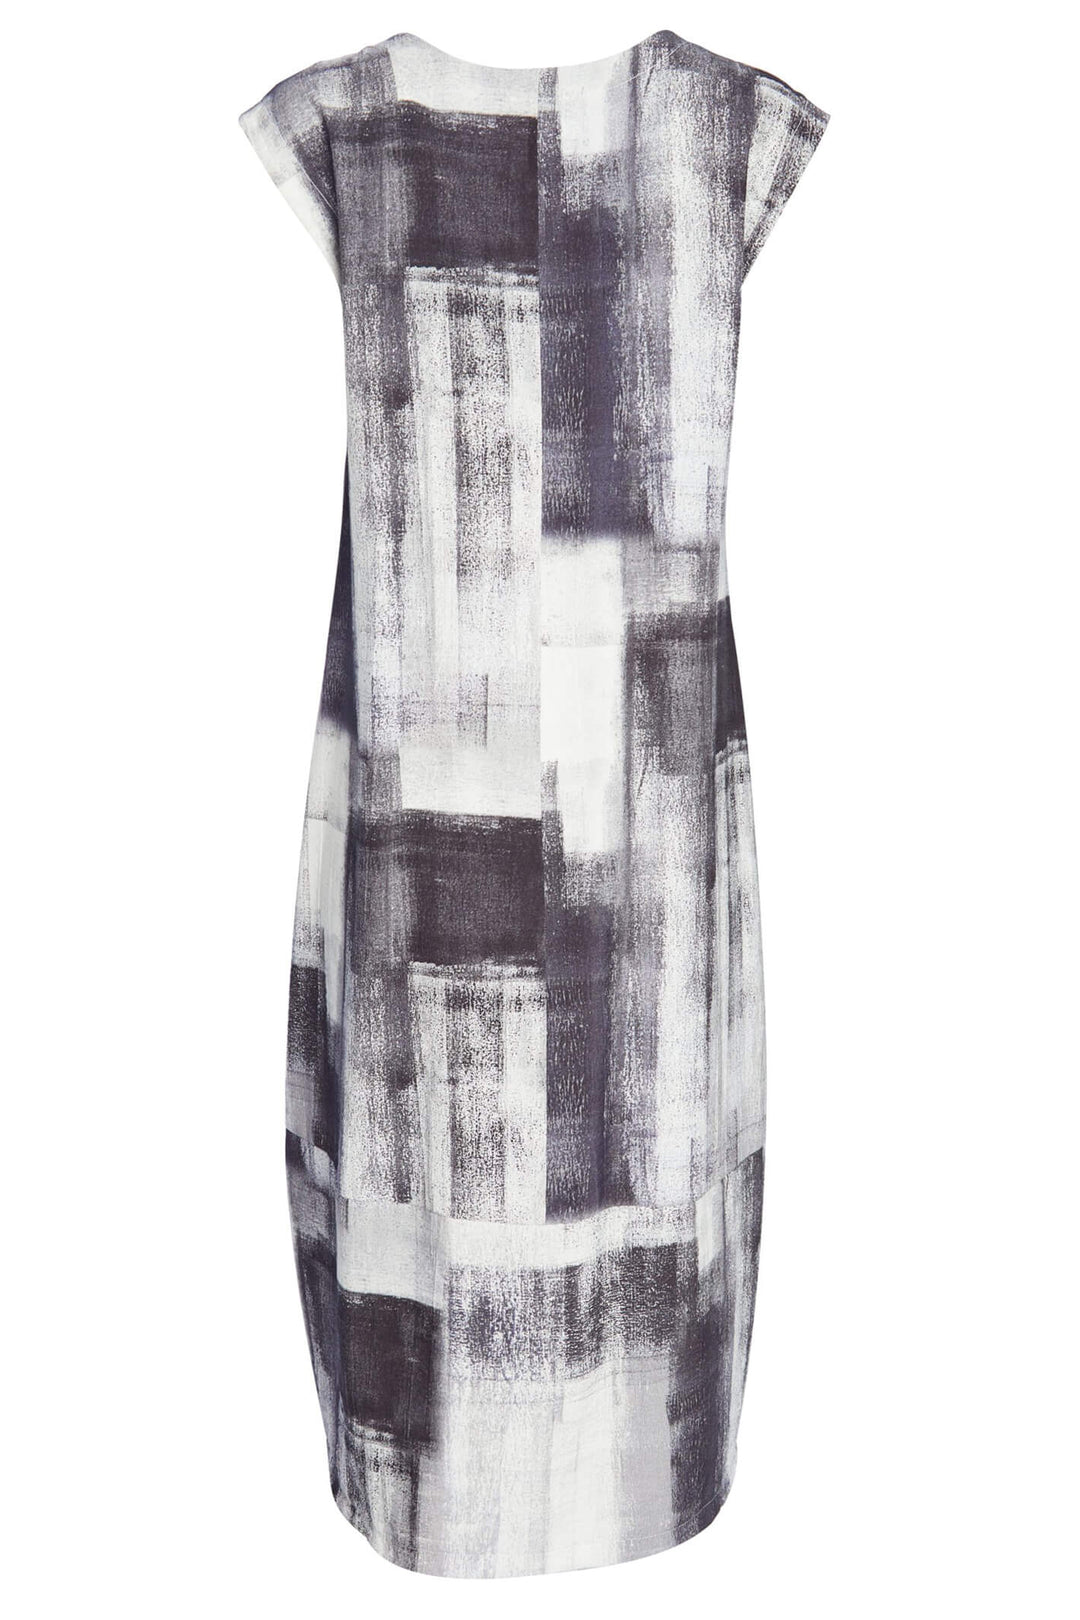 Naya NAS23238 White Steel Grey Print Curved Hem Dress - Olivia Grace Fashion